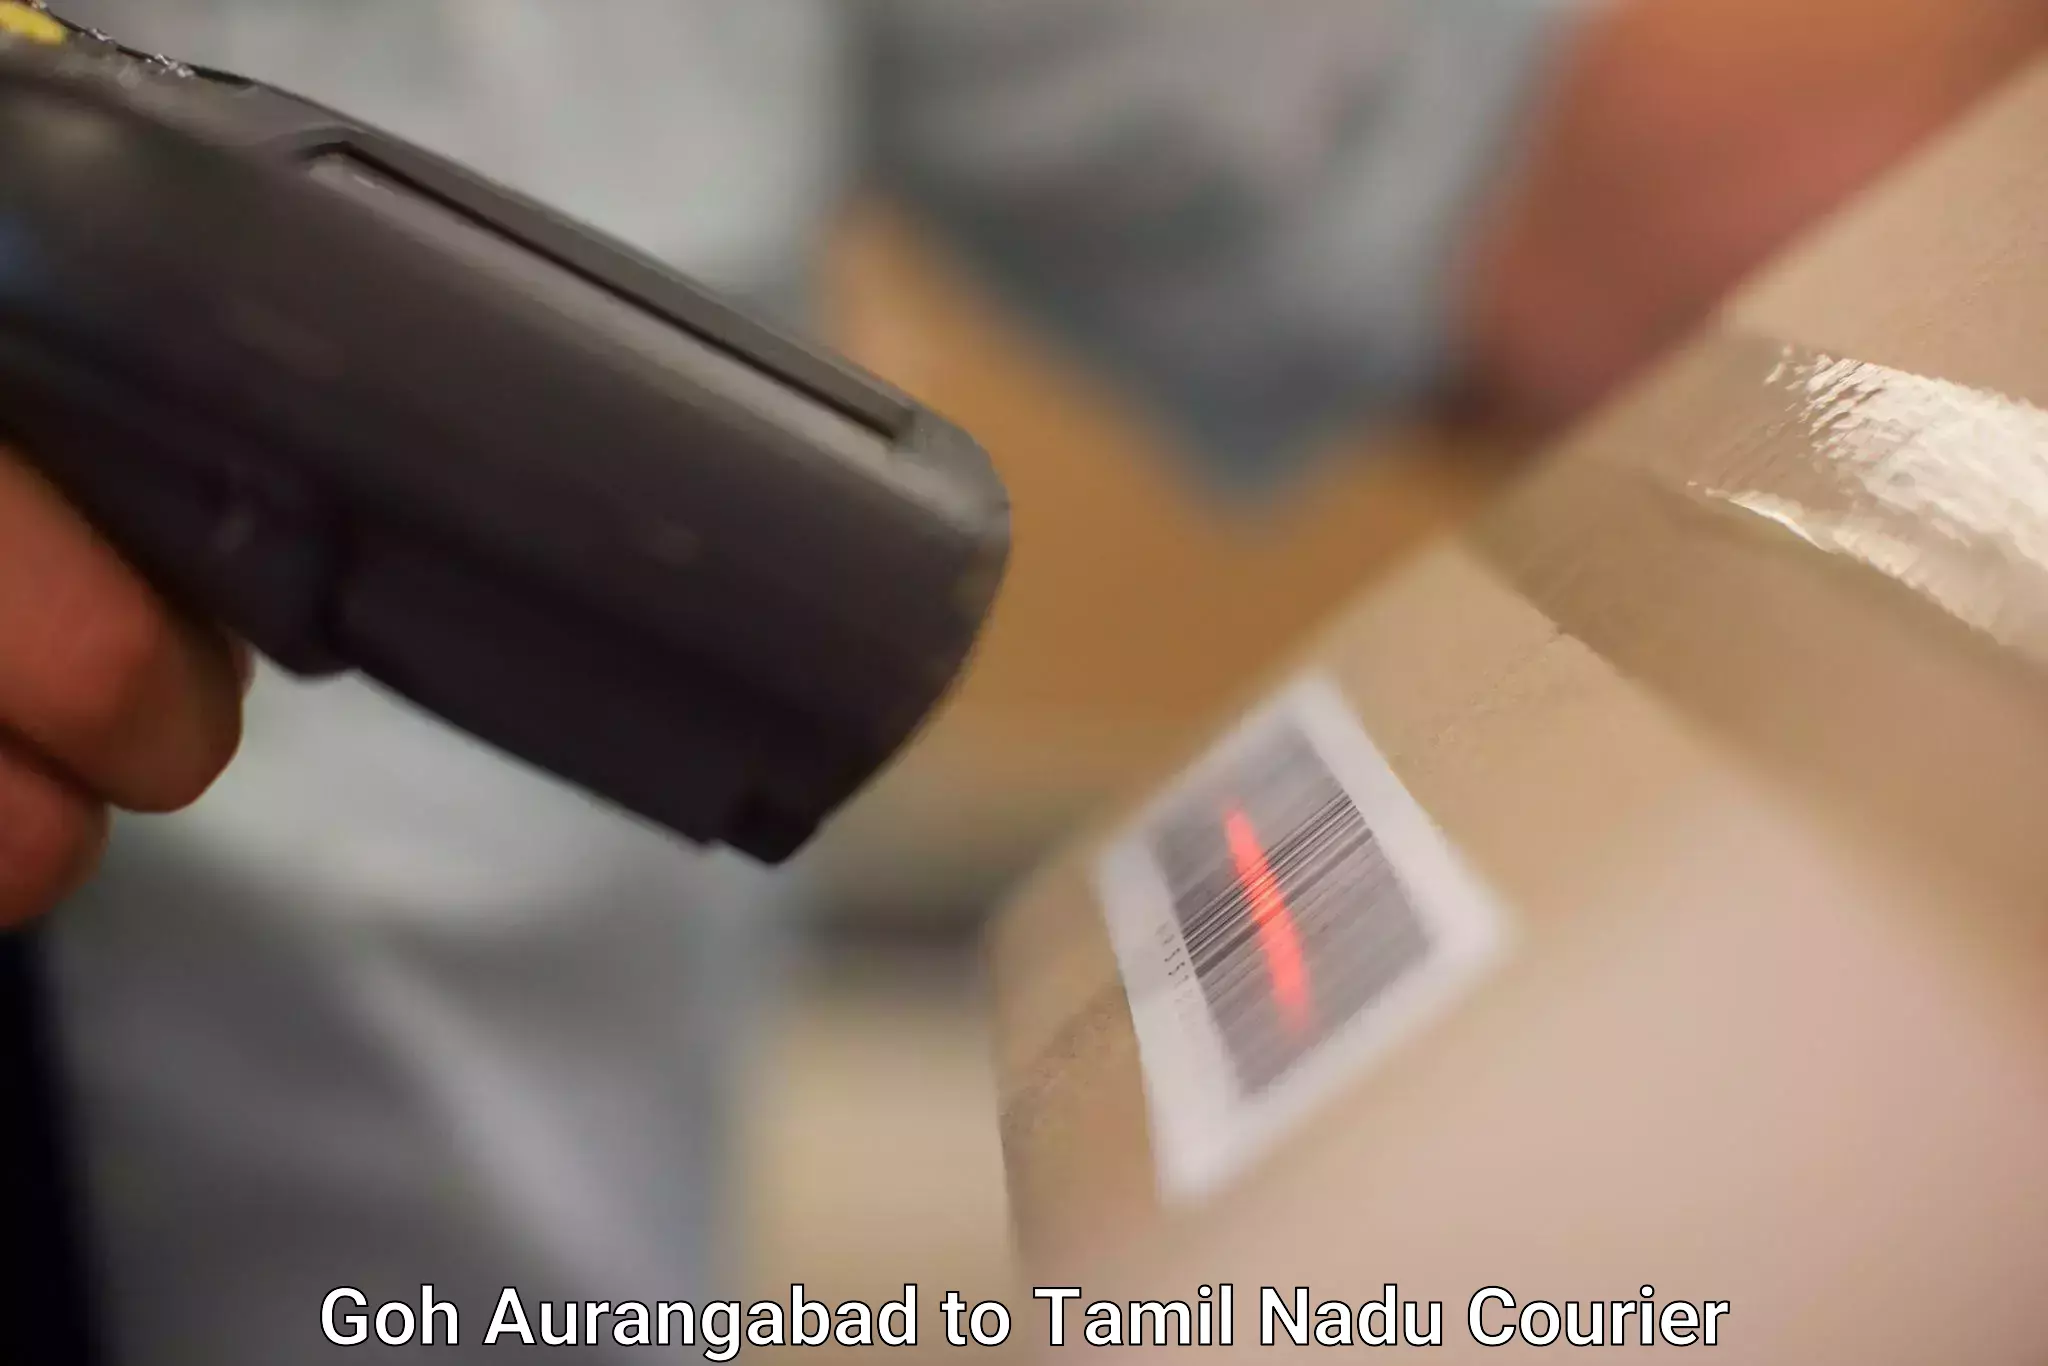 Courier service booking Goh Aurangabad to Tamil Nadu